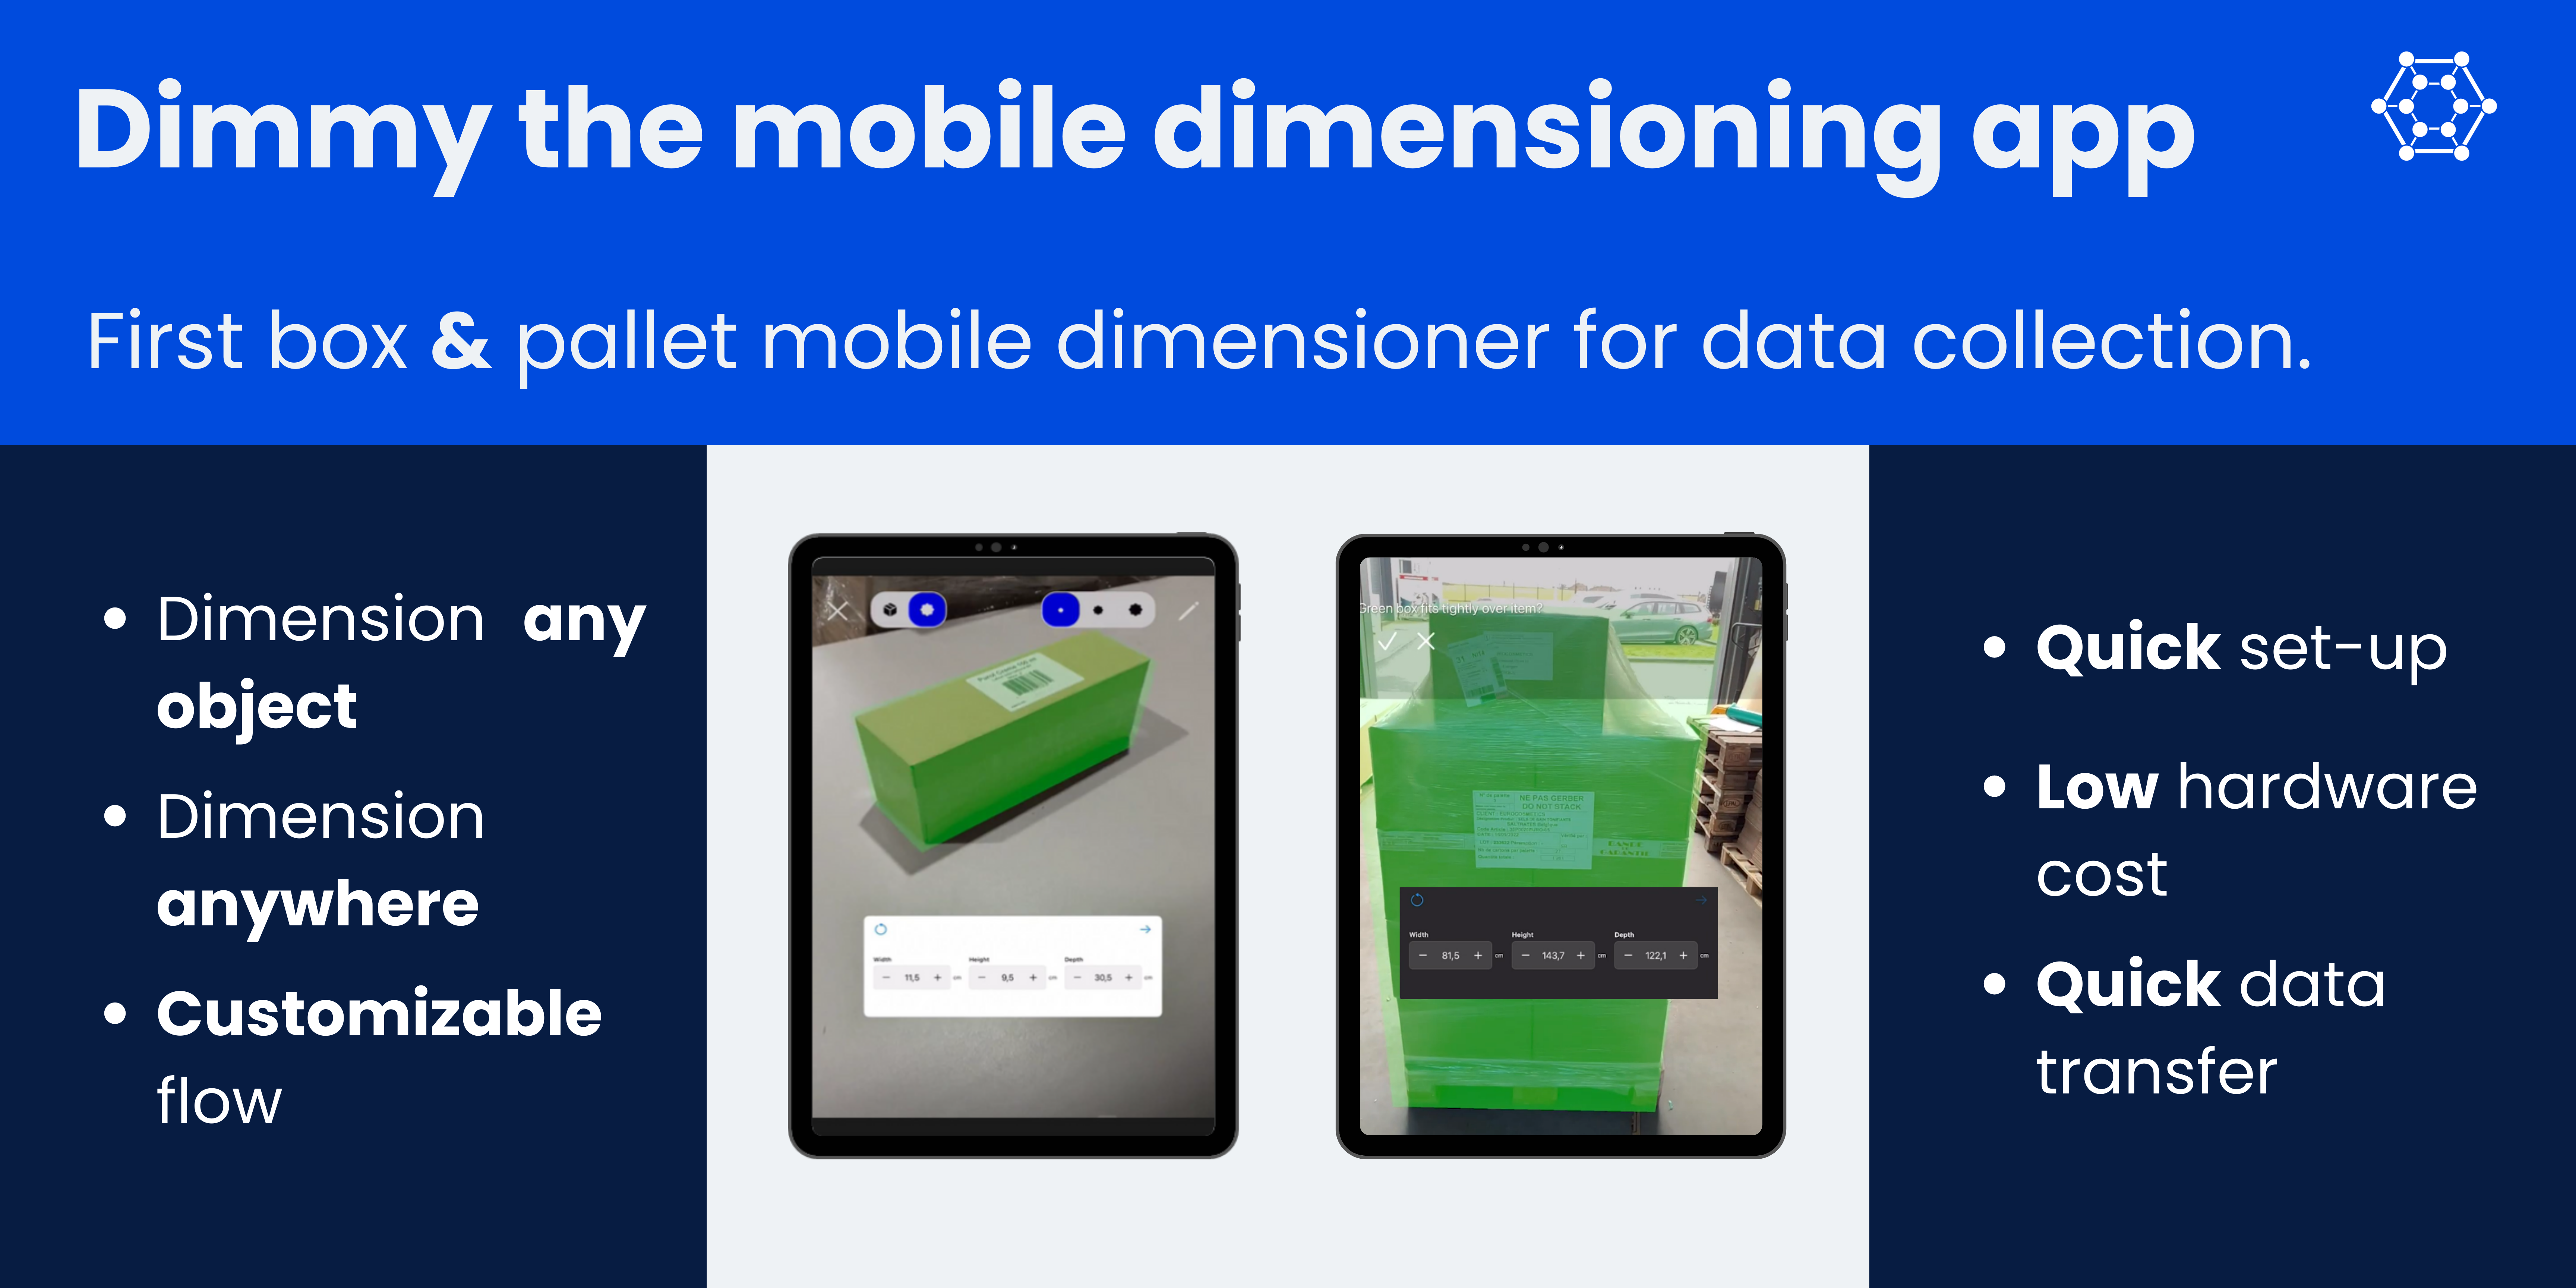 Mobile dimensioning app